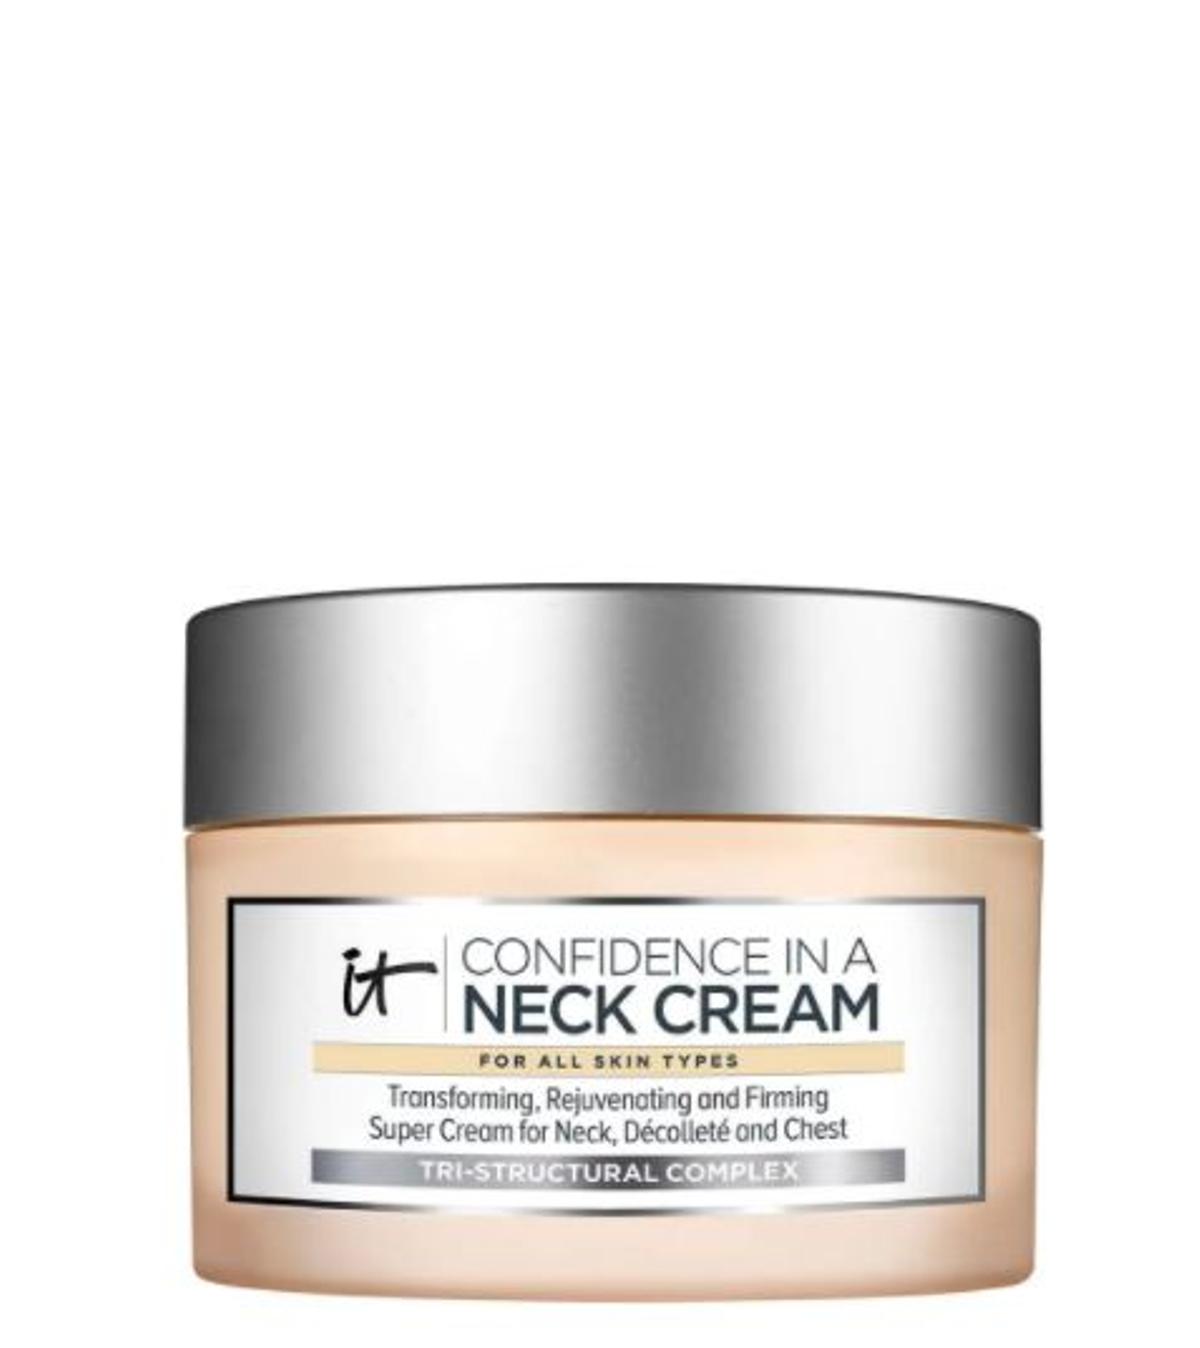 Crema de cuello Confidence in a Neck Cream de IT Cosmetics